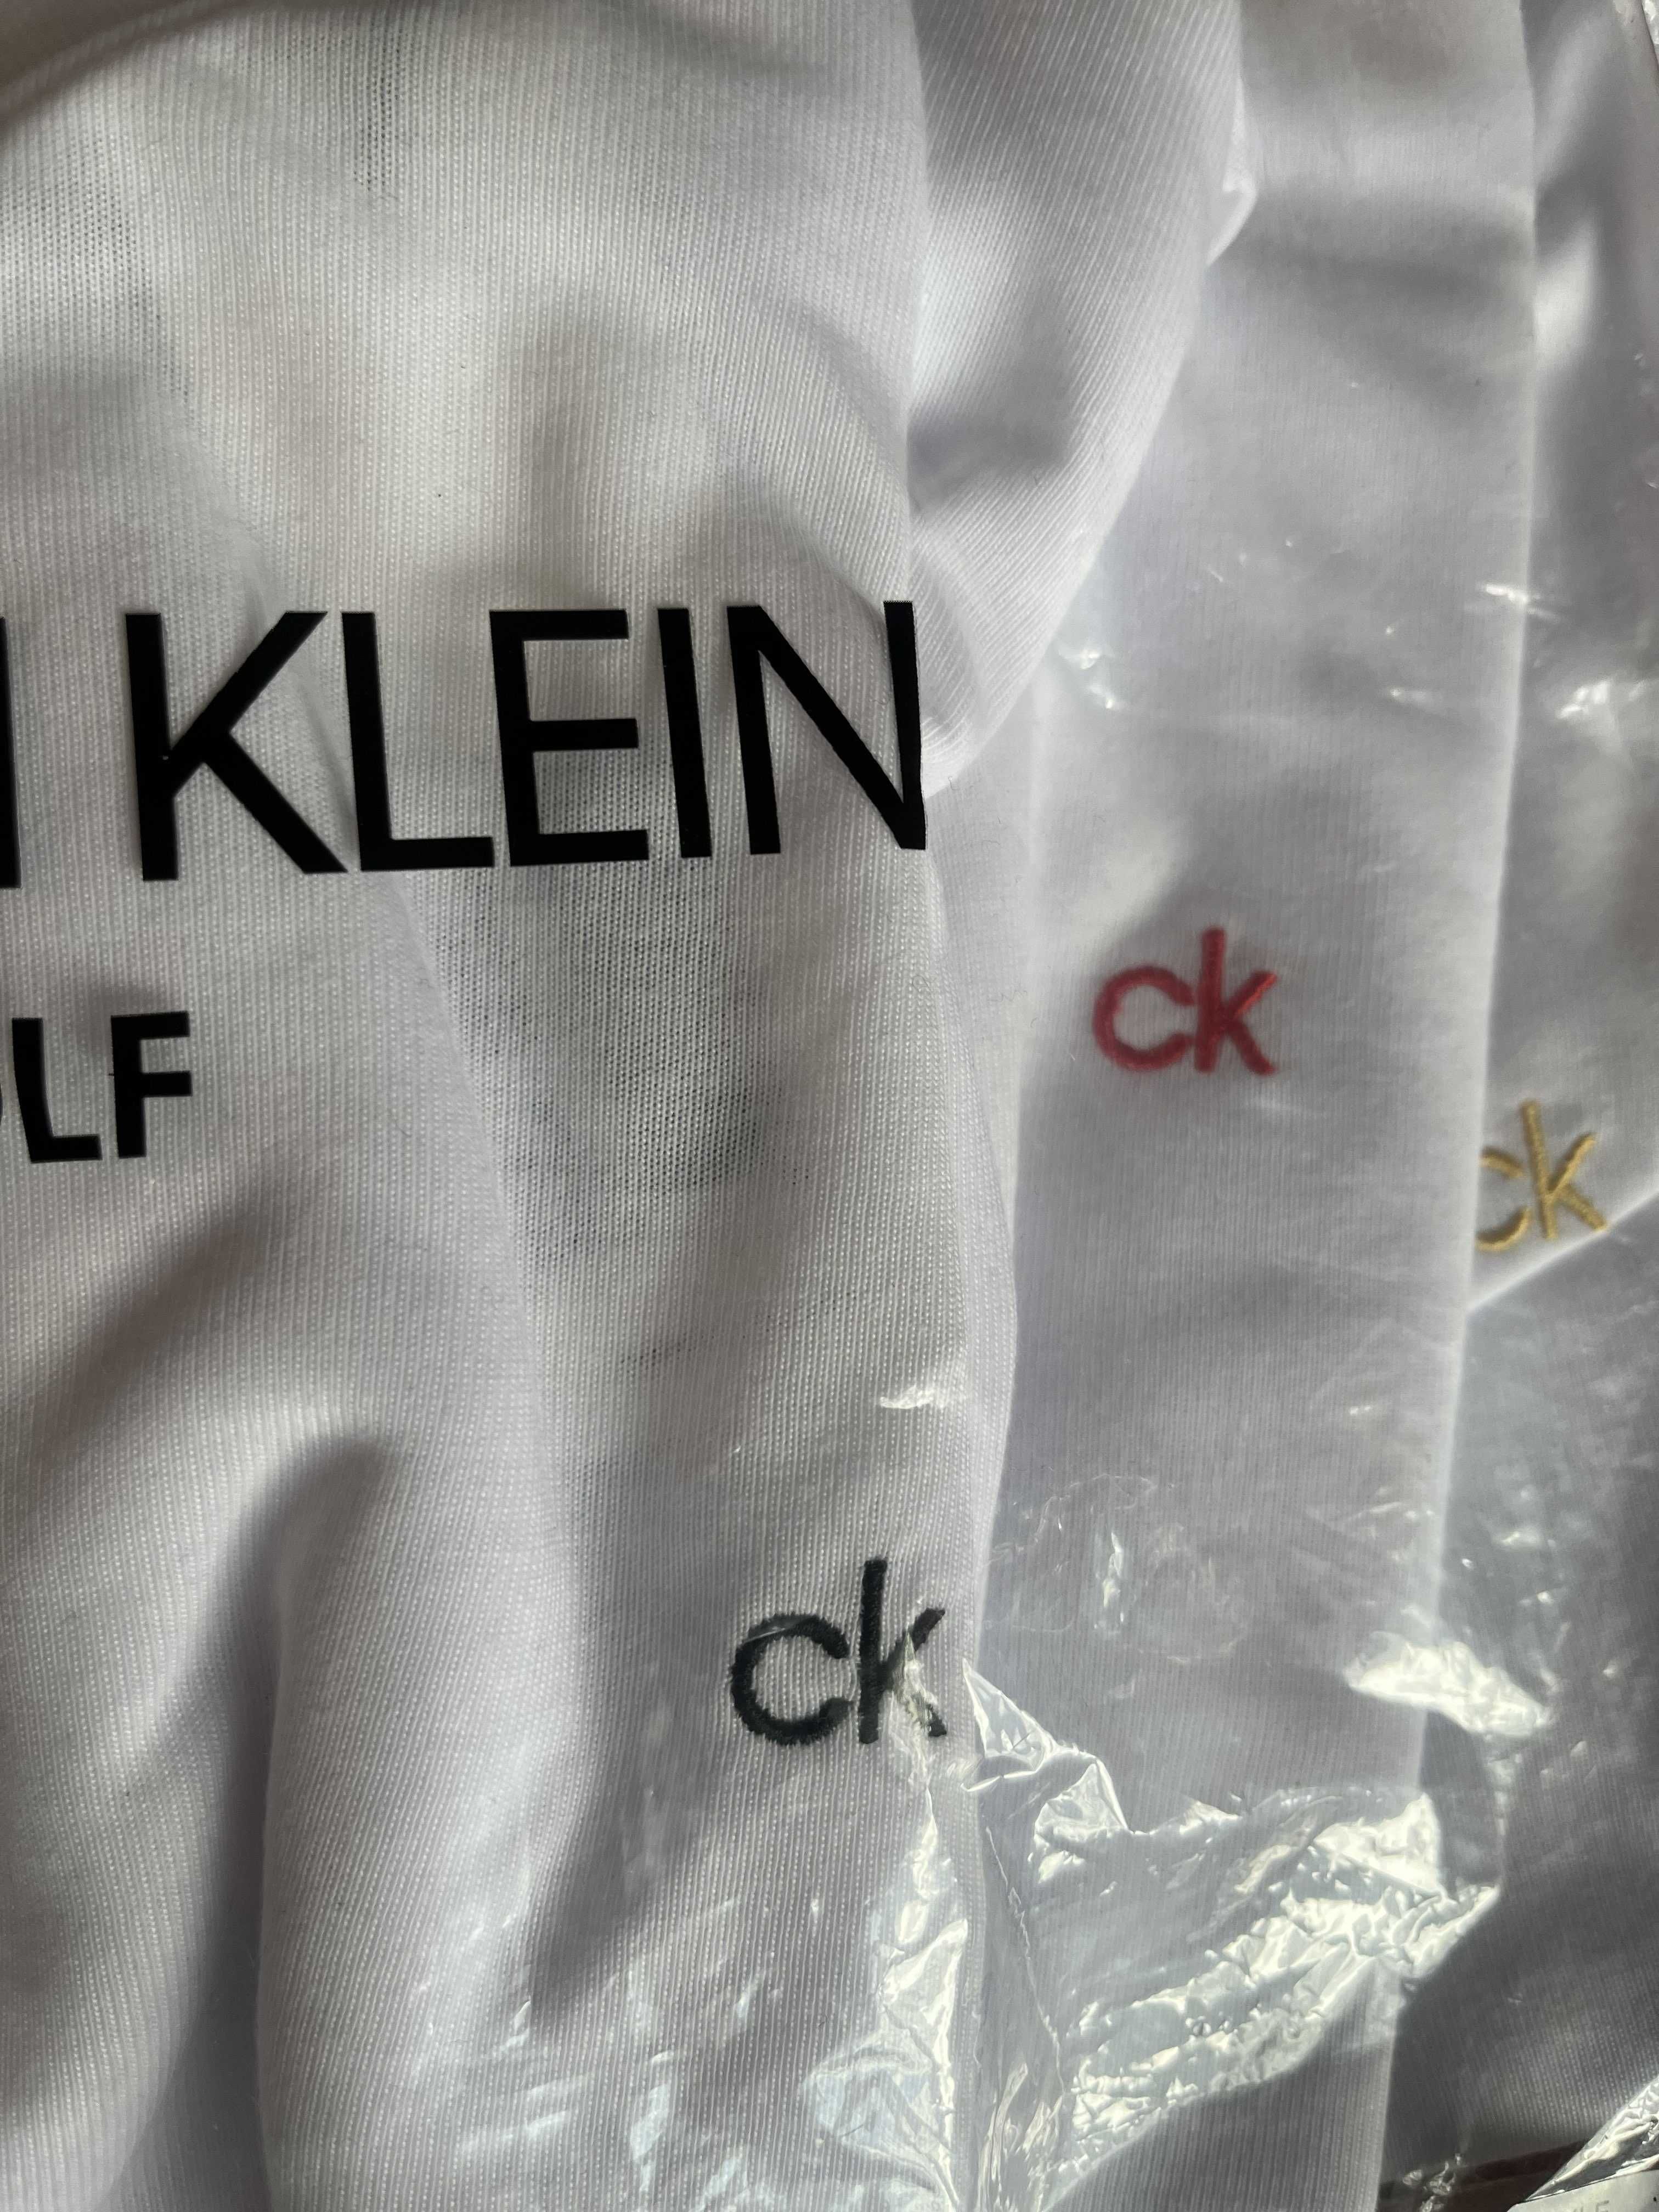 Calvin Klein Golf T-shirt basic 3 pack M